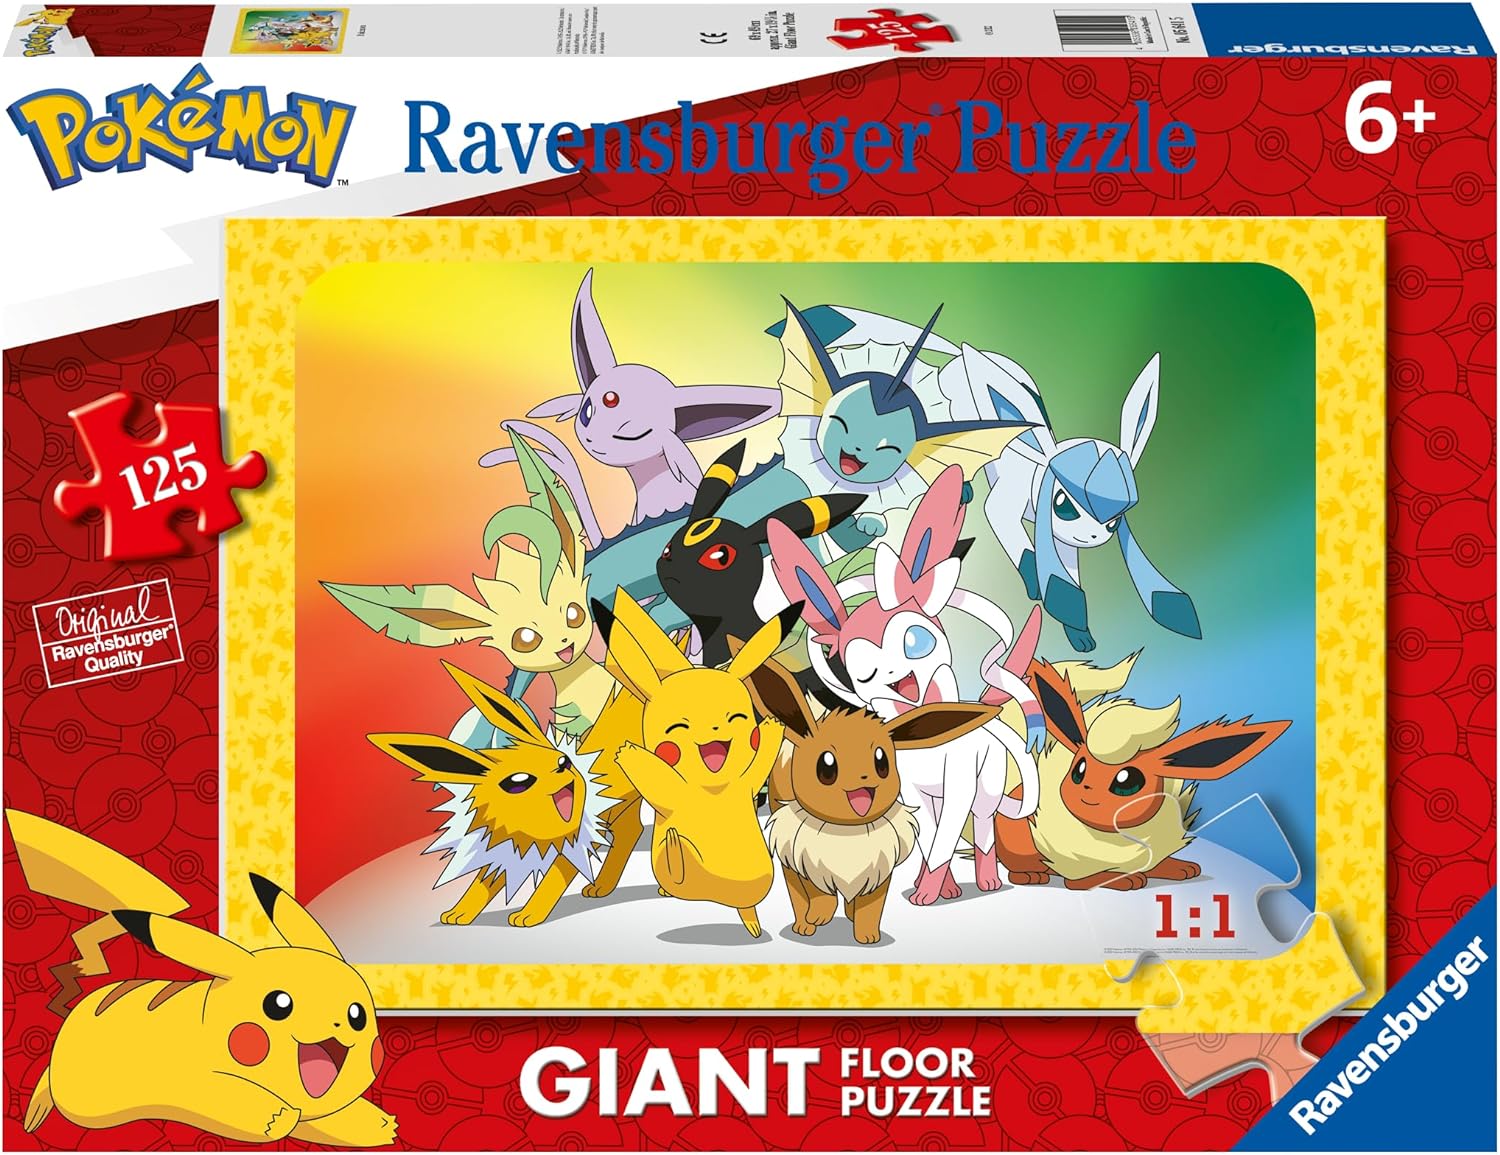 5641 - Puzzle Giganti Pokemon, Puzzle 125 Pezzi, Età 6+, Ravensburger Puzzle  Pokémon, Collezione 125 Giant Pavimento – Full Toys